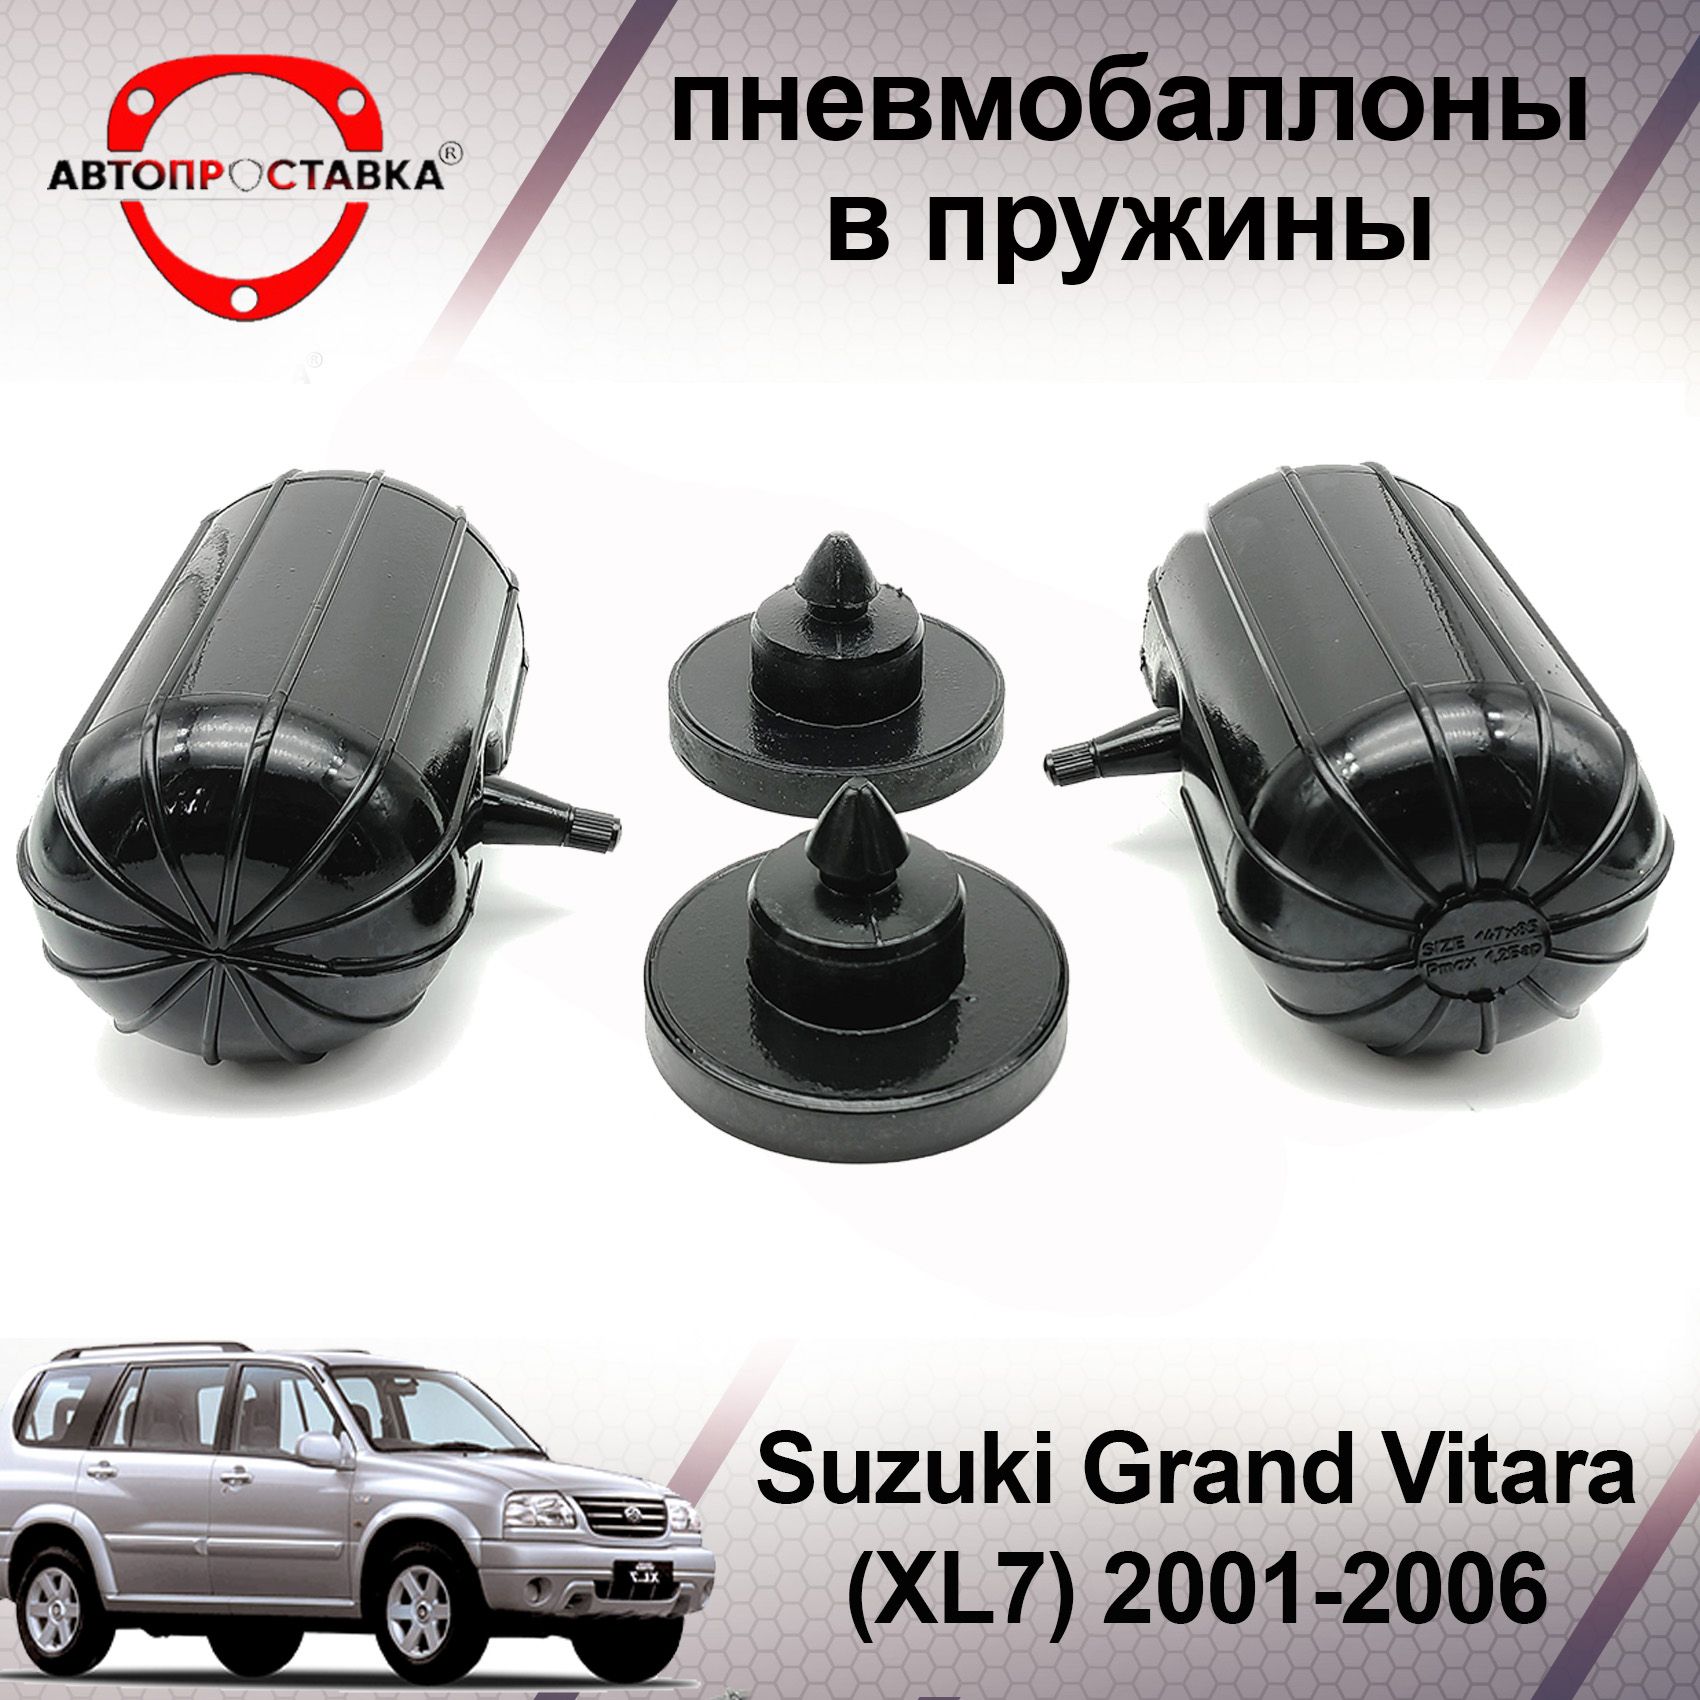 Grand Vitara / Grand Vitara XL-7 - Форум Suzuki Club Kazakhstan